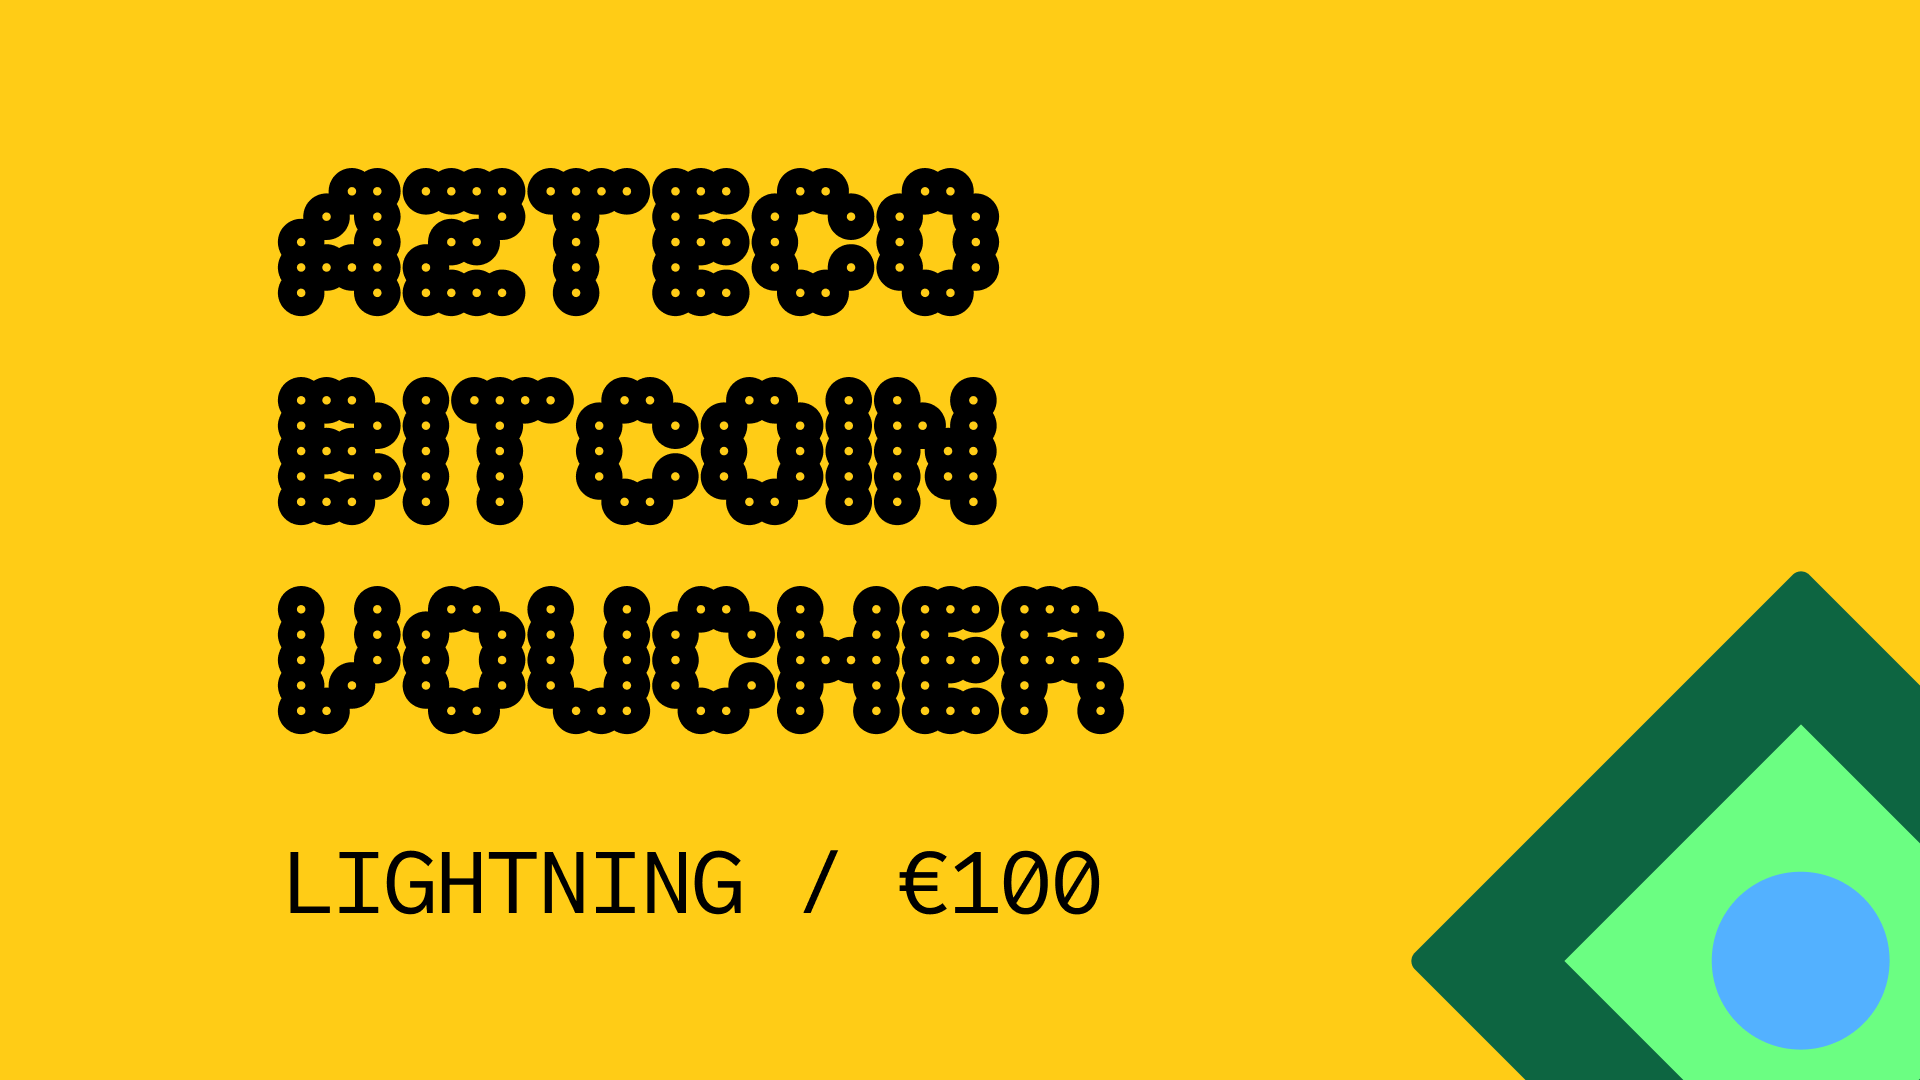 [$ 112.98] Azteco Bitcoin Lighting €100 Voucher